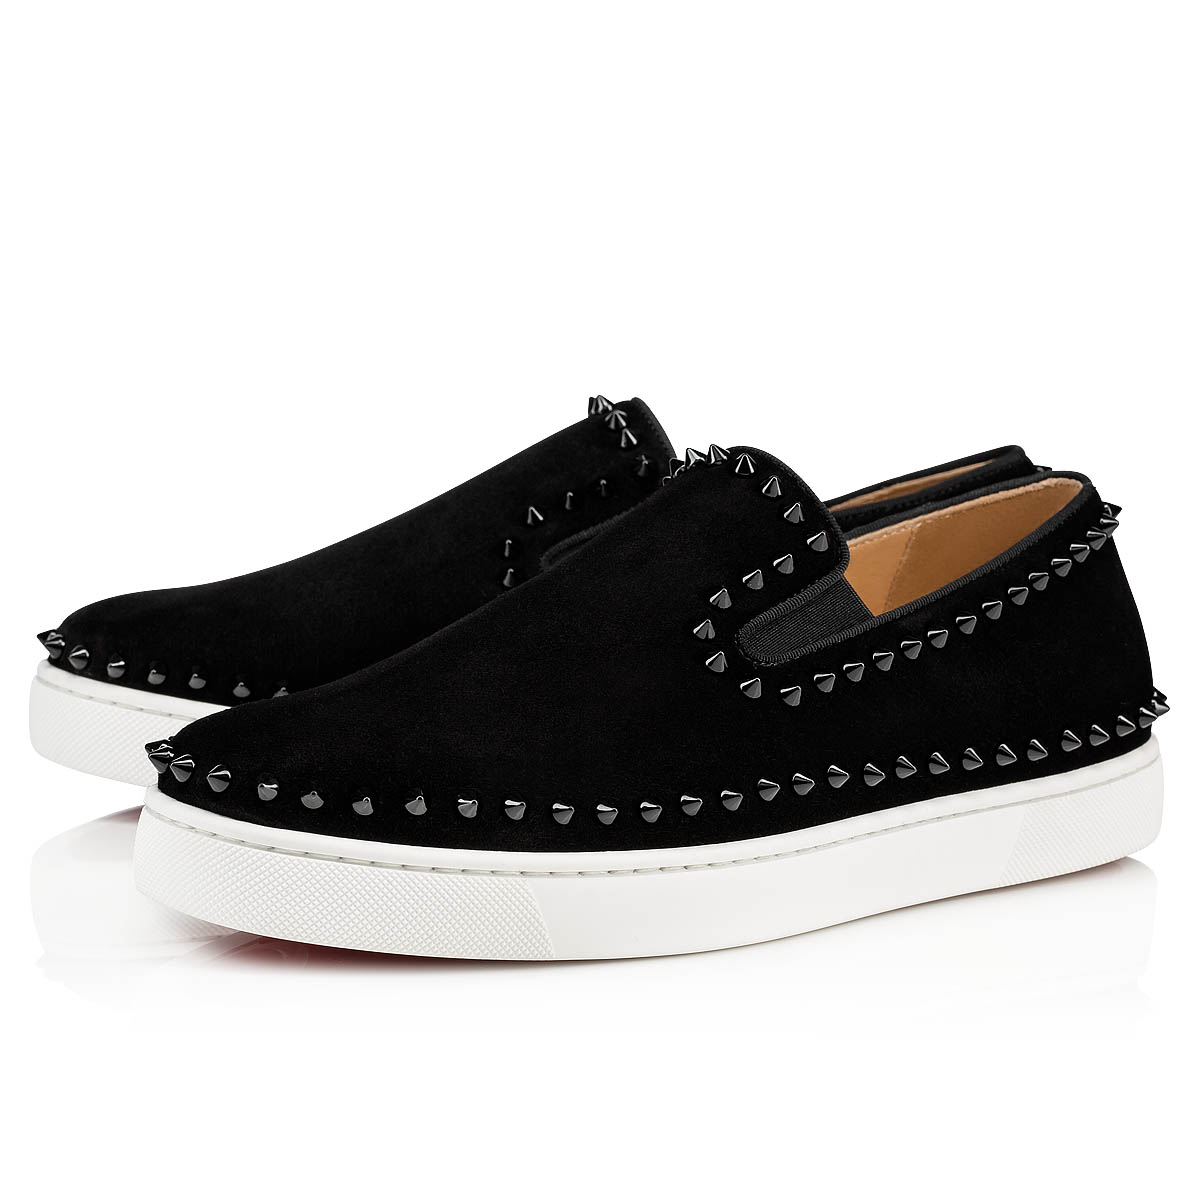 PIK BOAT BLACK/BLACK VEAU VELOURS - Shoes - Men - Christian Louboutin